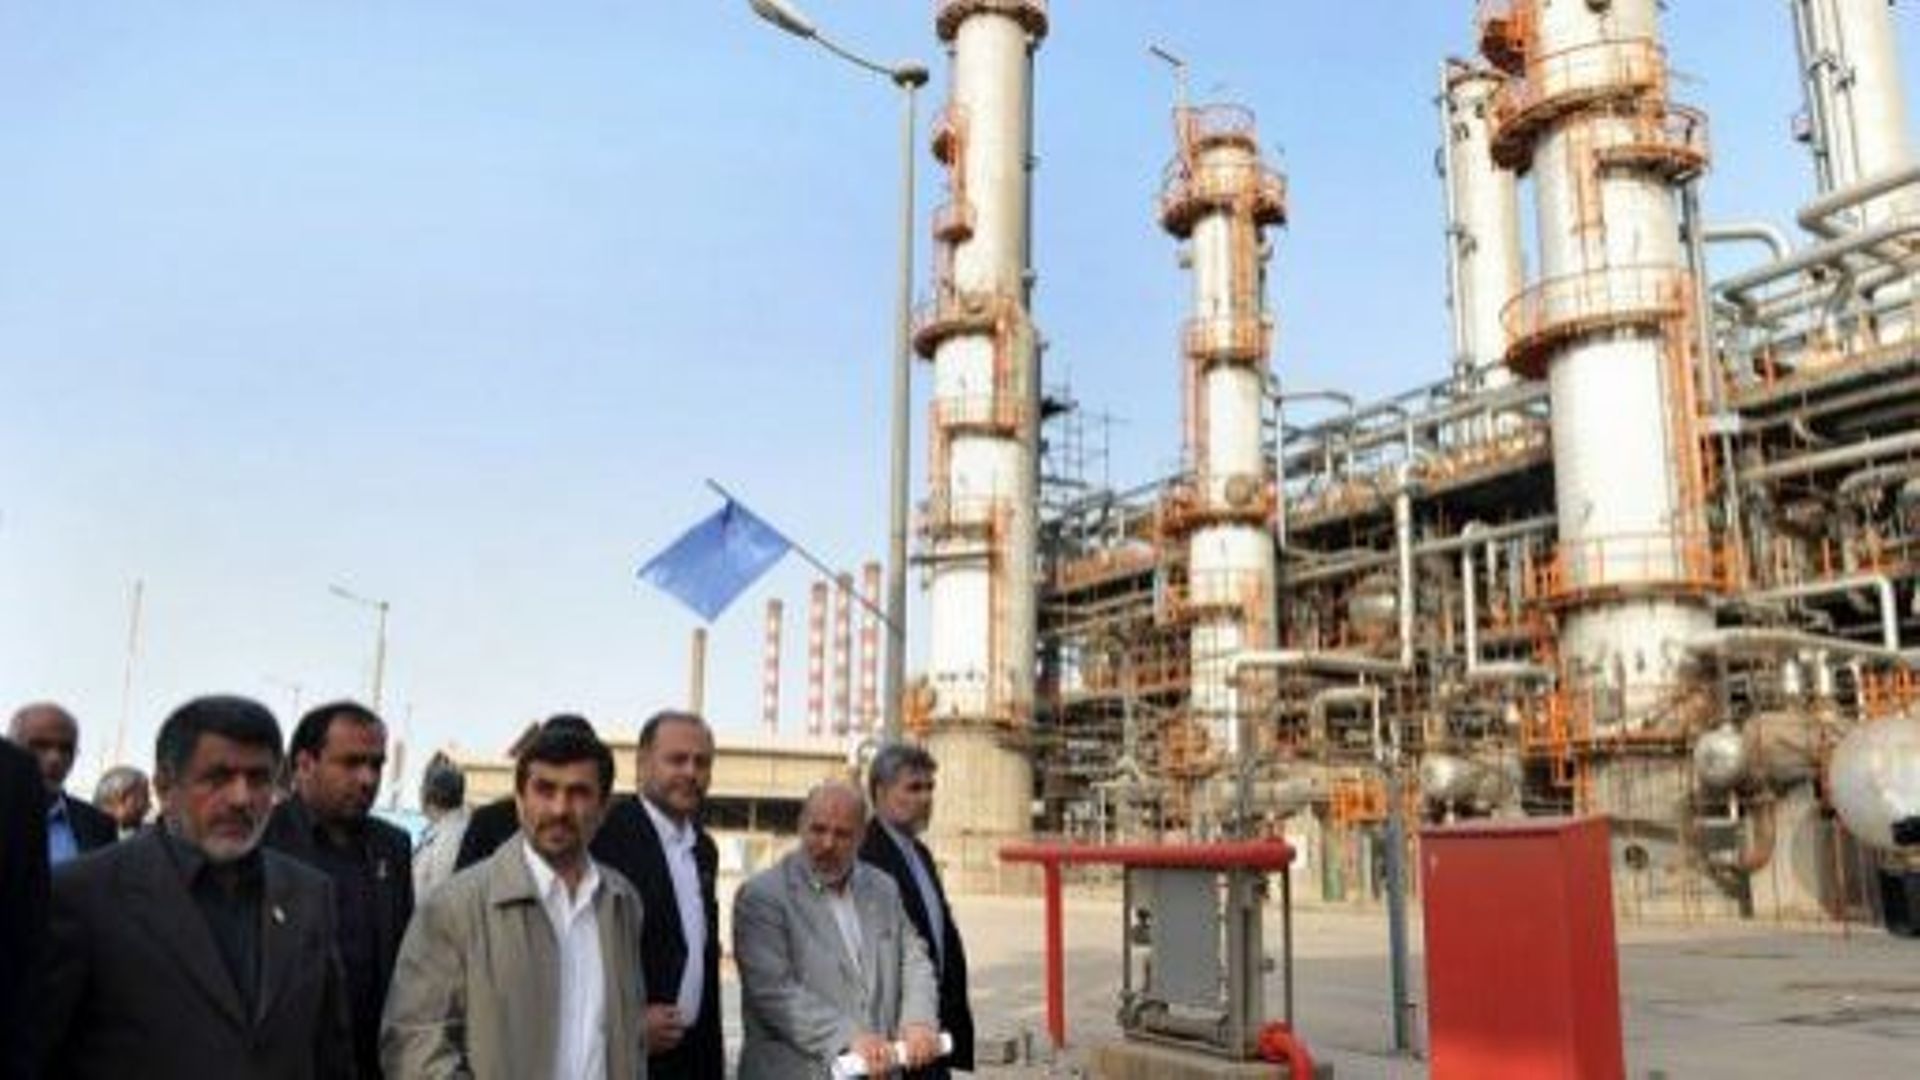 Le président iranien Mahmoud Ahmadinejad (C) visite la raffinerie de Abadan (sud-ouest), le 24 mai 2012